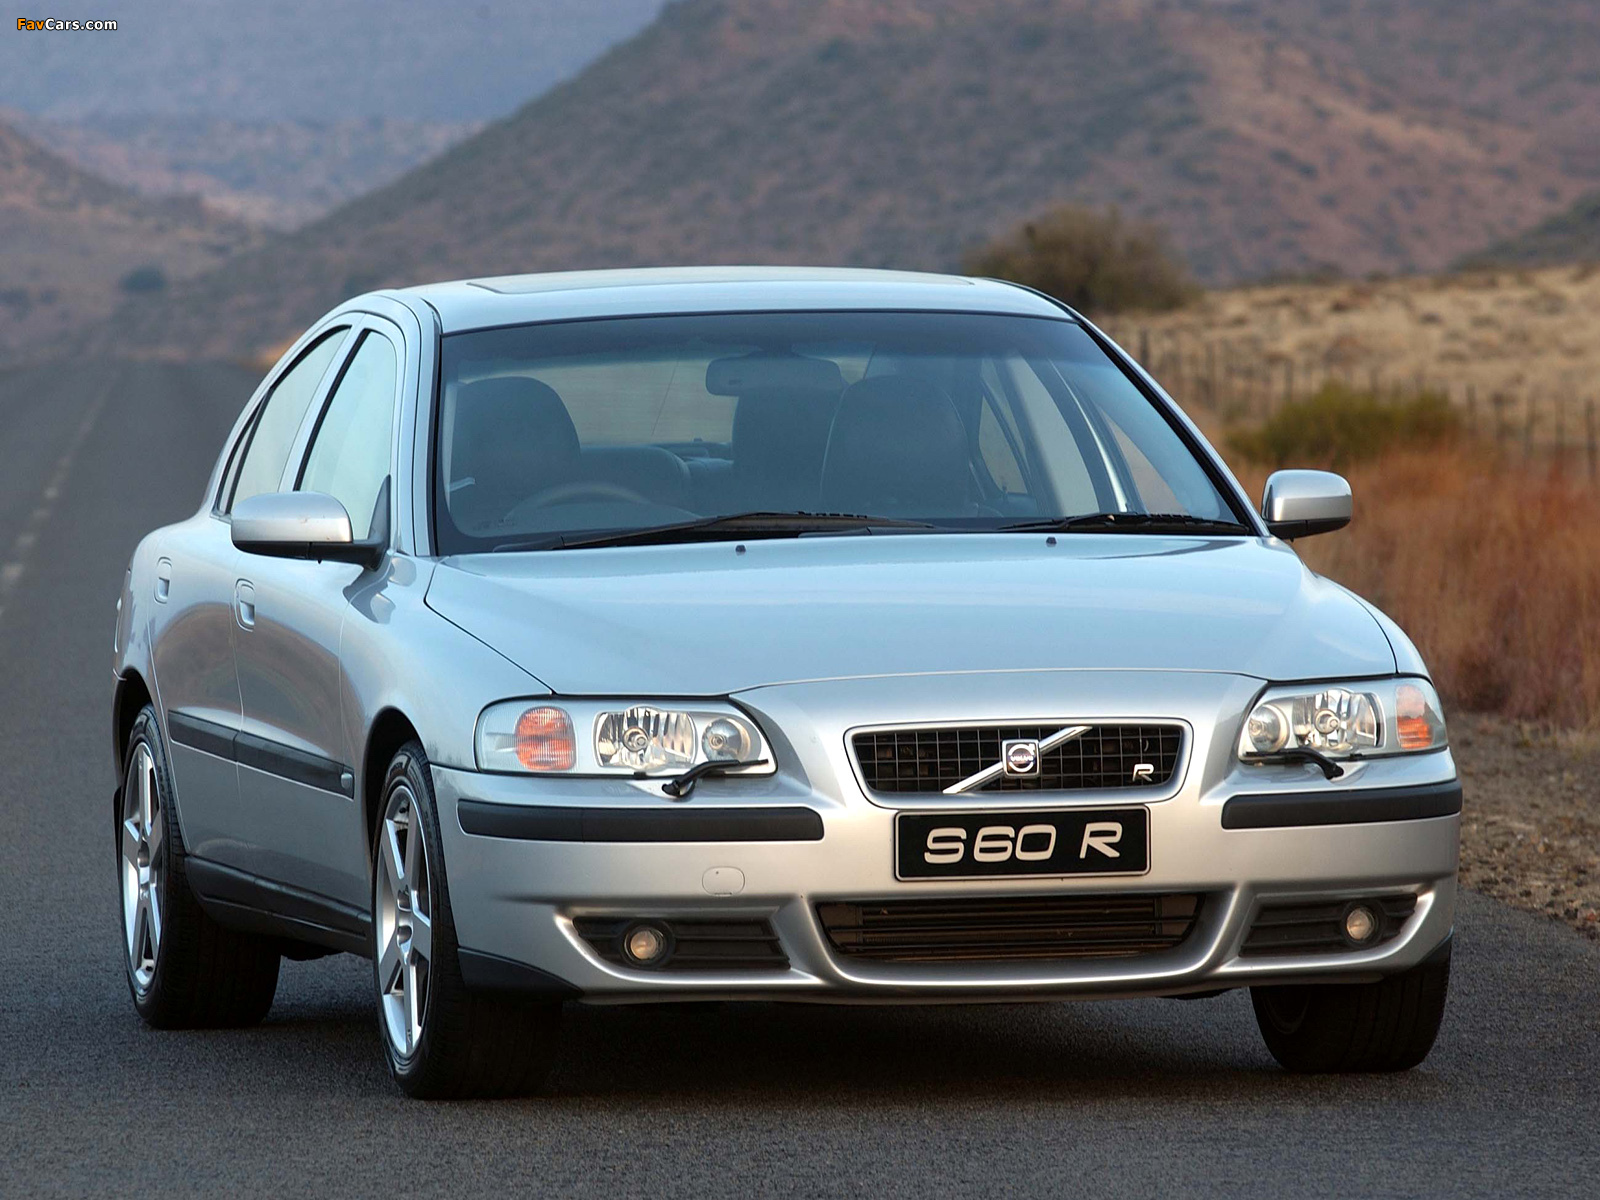 Год выпуска volvo. Volvo s60 2004. Volvo s60 r 2004. Volvo s60r. Volvo s60 1999.